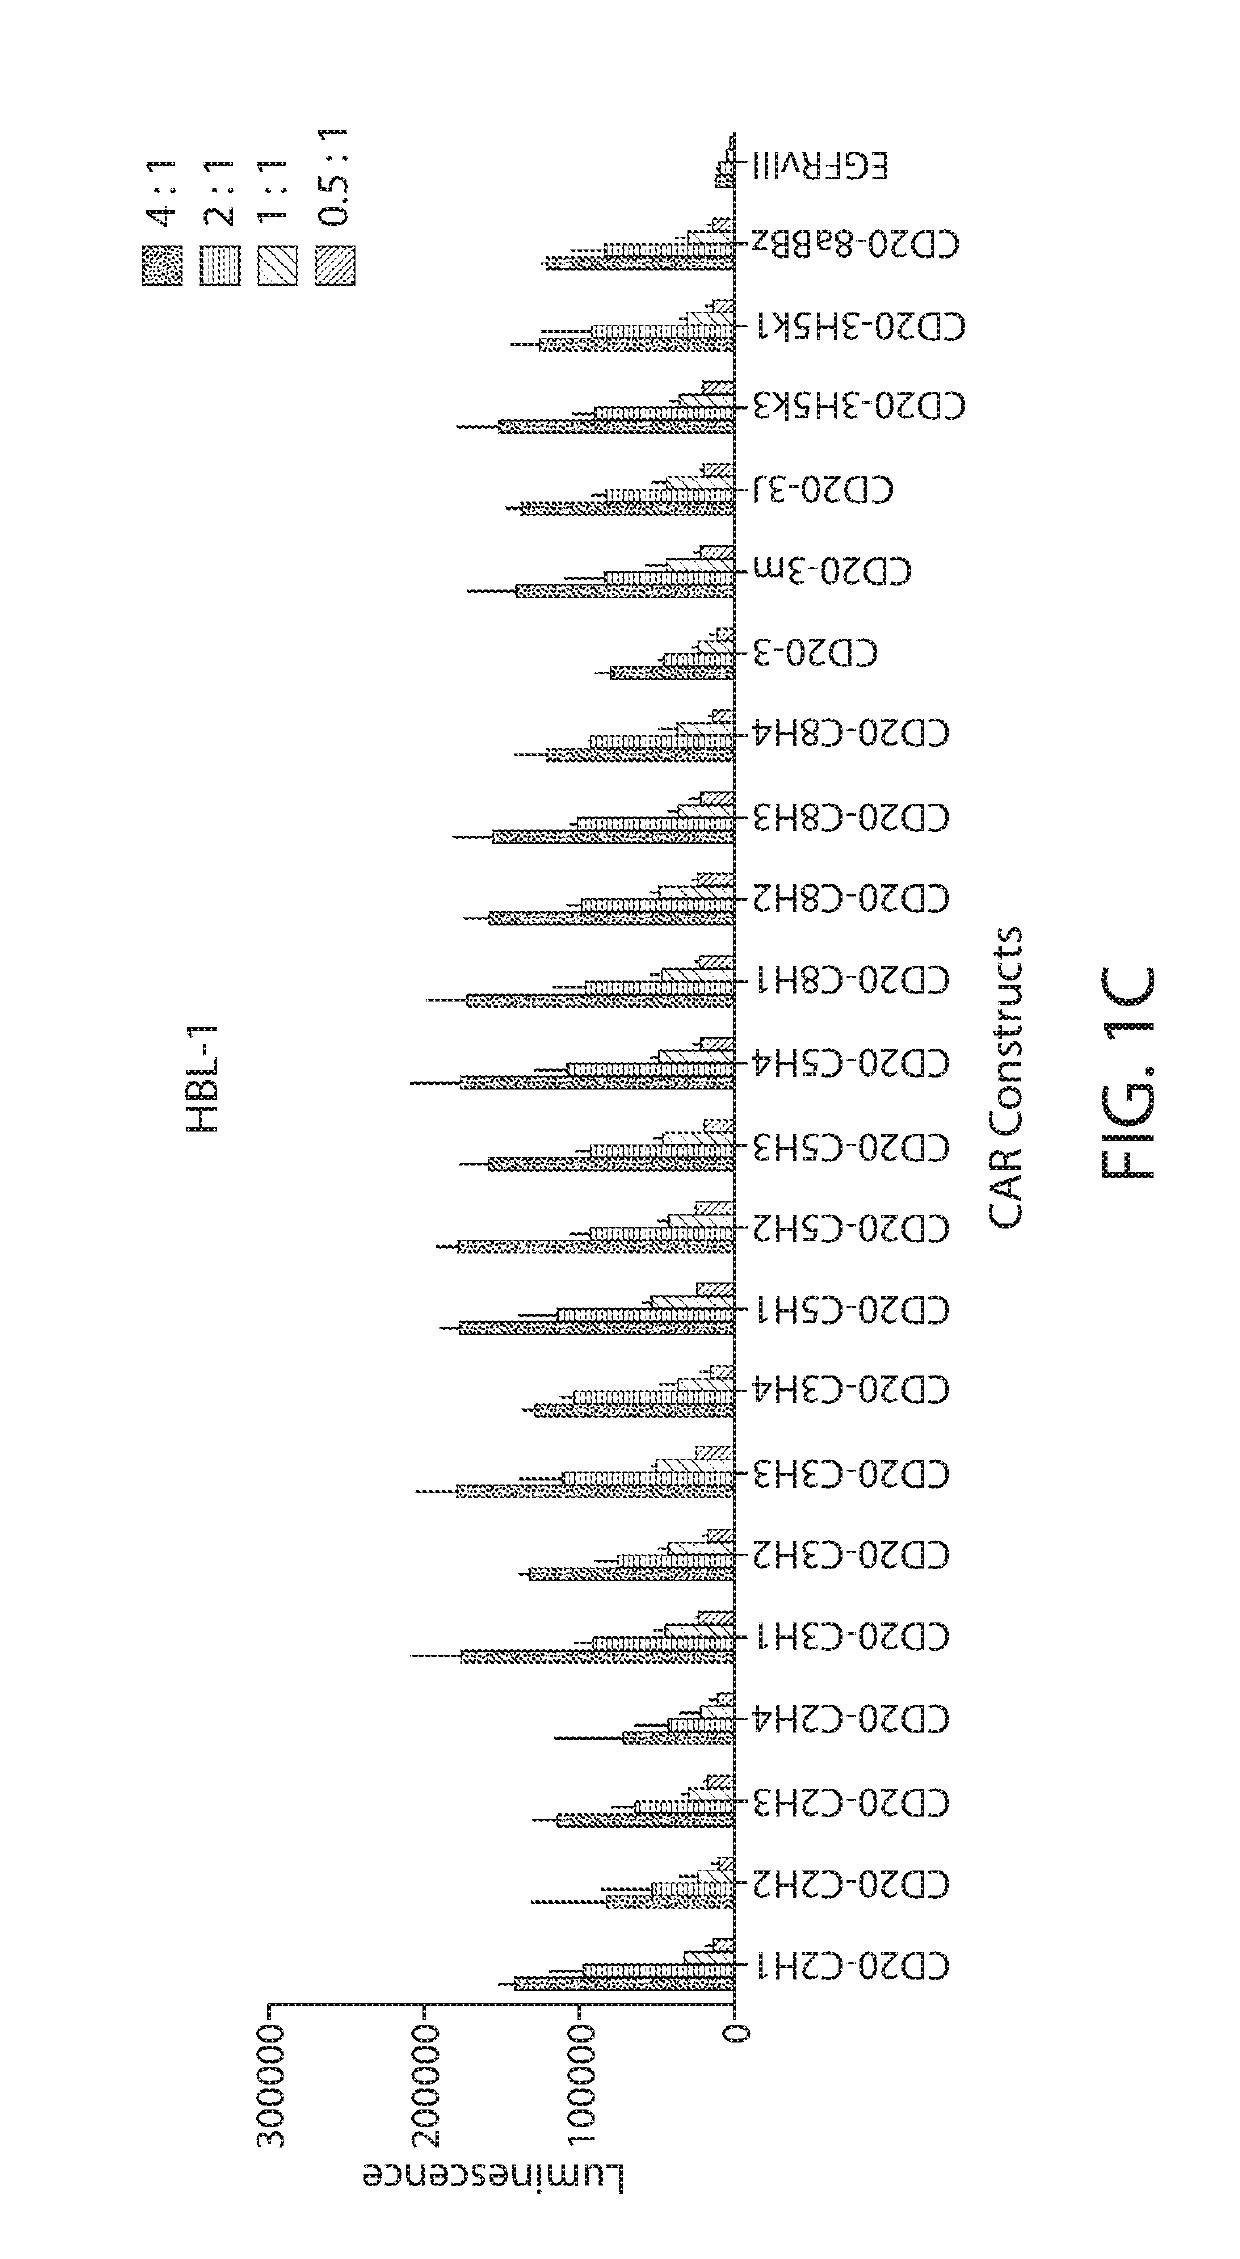 Nucleic acid molecules encoding chimeric antigen receptors comprising a CD20 binding domain